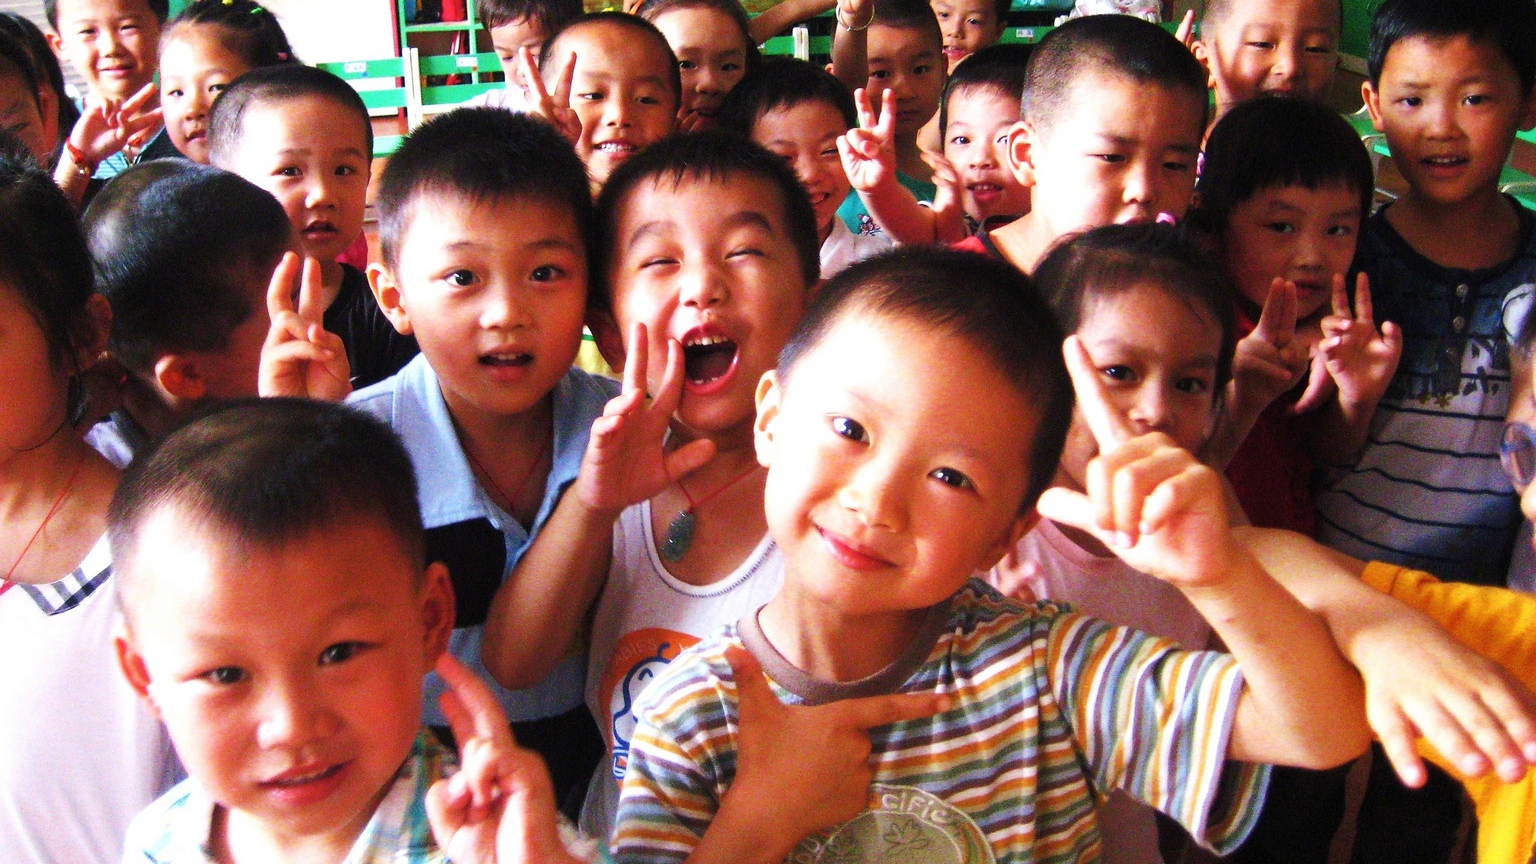 BLOOMBERG: Čína zrejme ukončí tvrdú politiku obmedzovania počtu detí v rodine